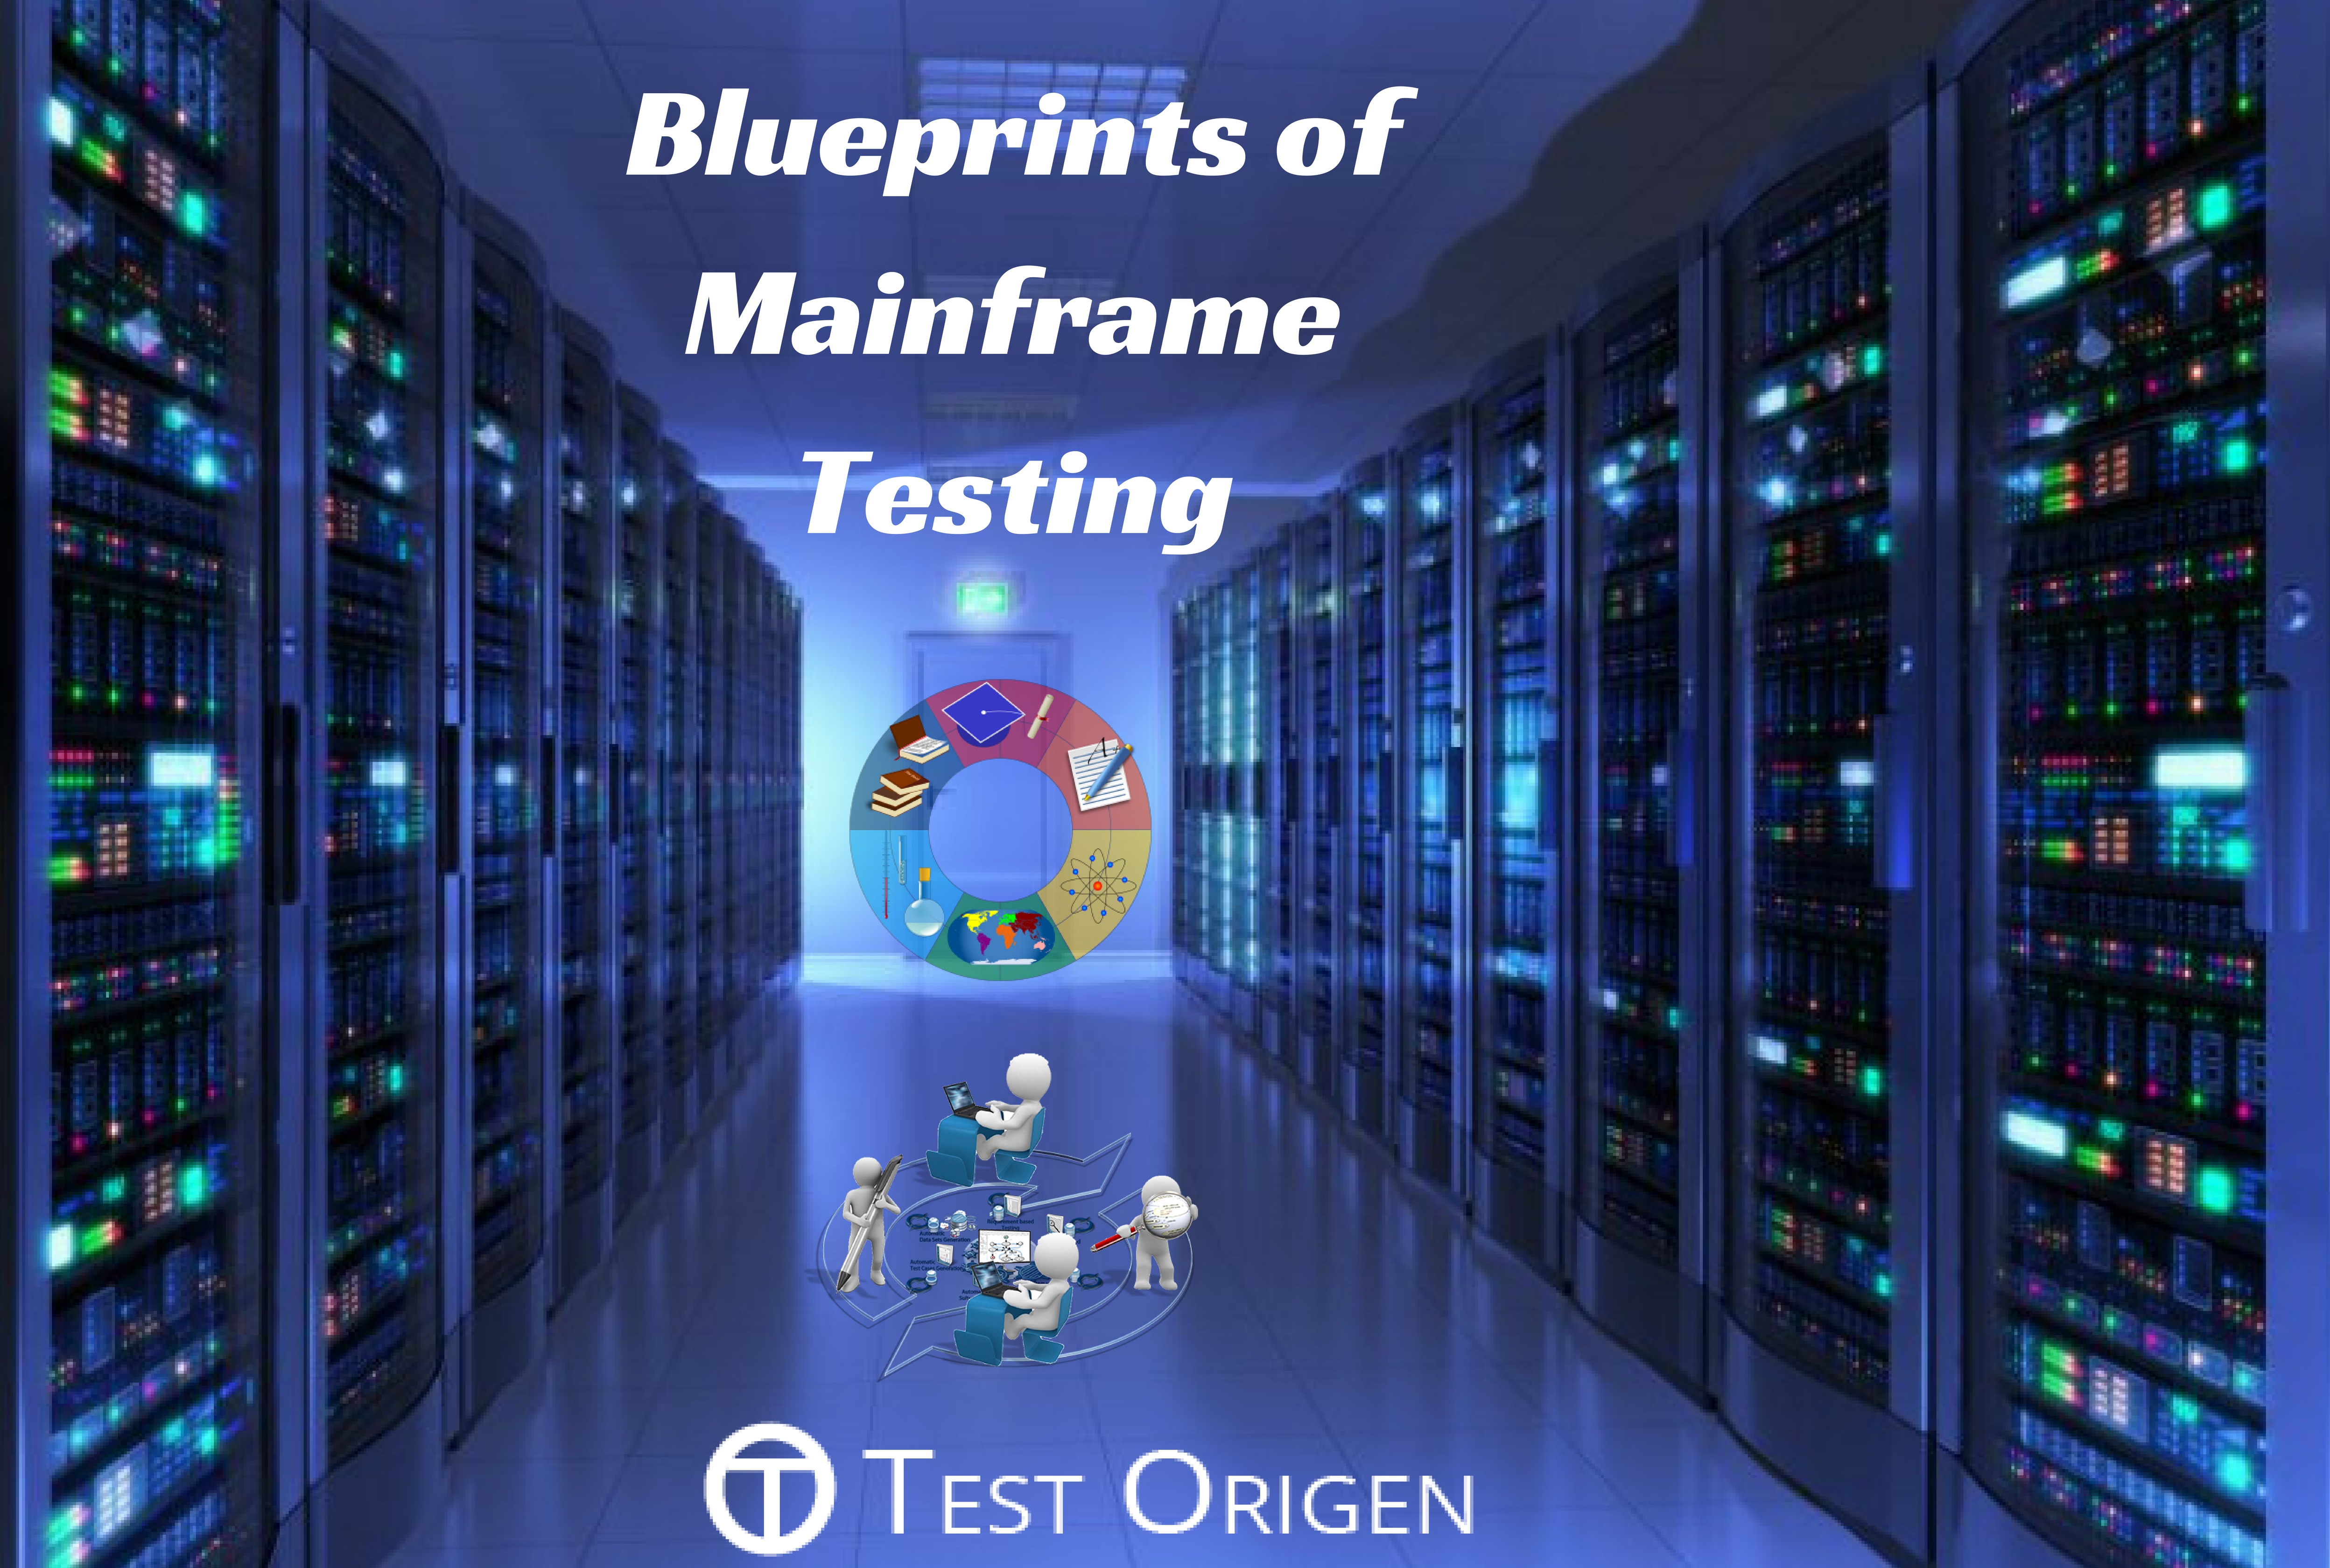 Blueprints of Mainframe Testing